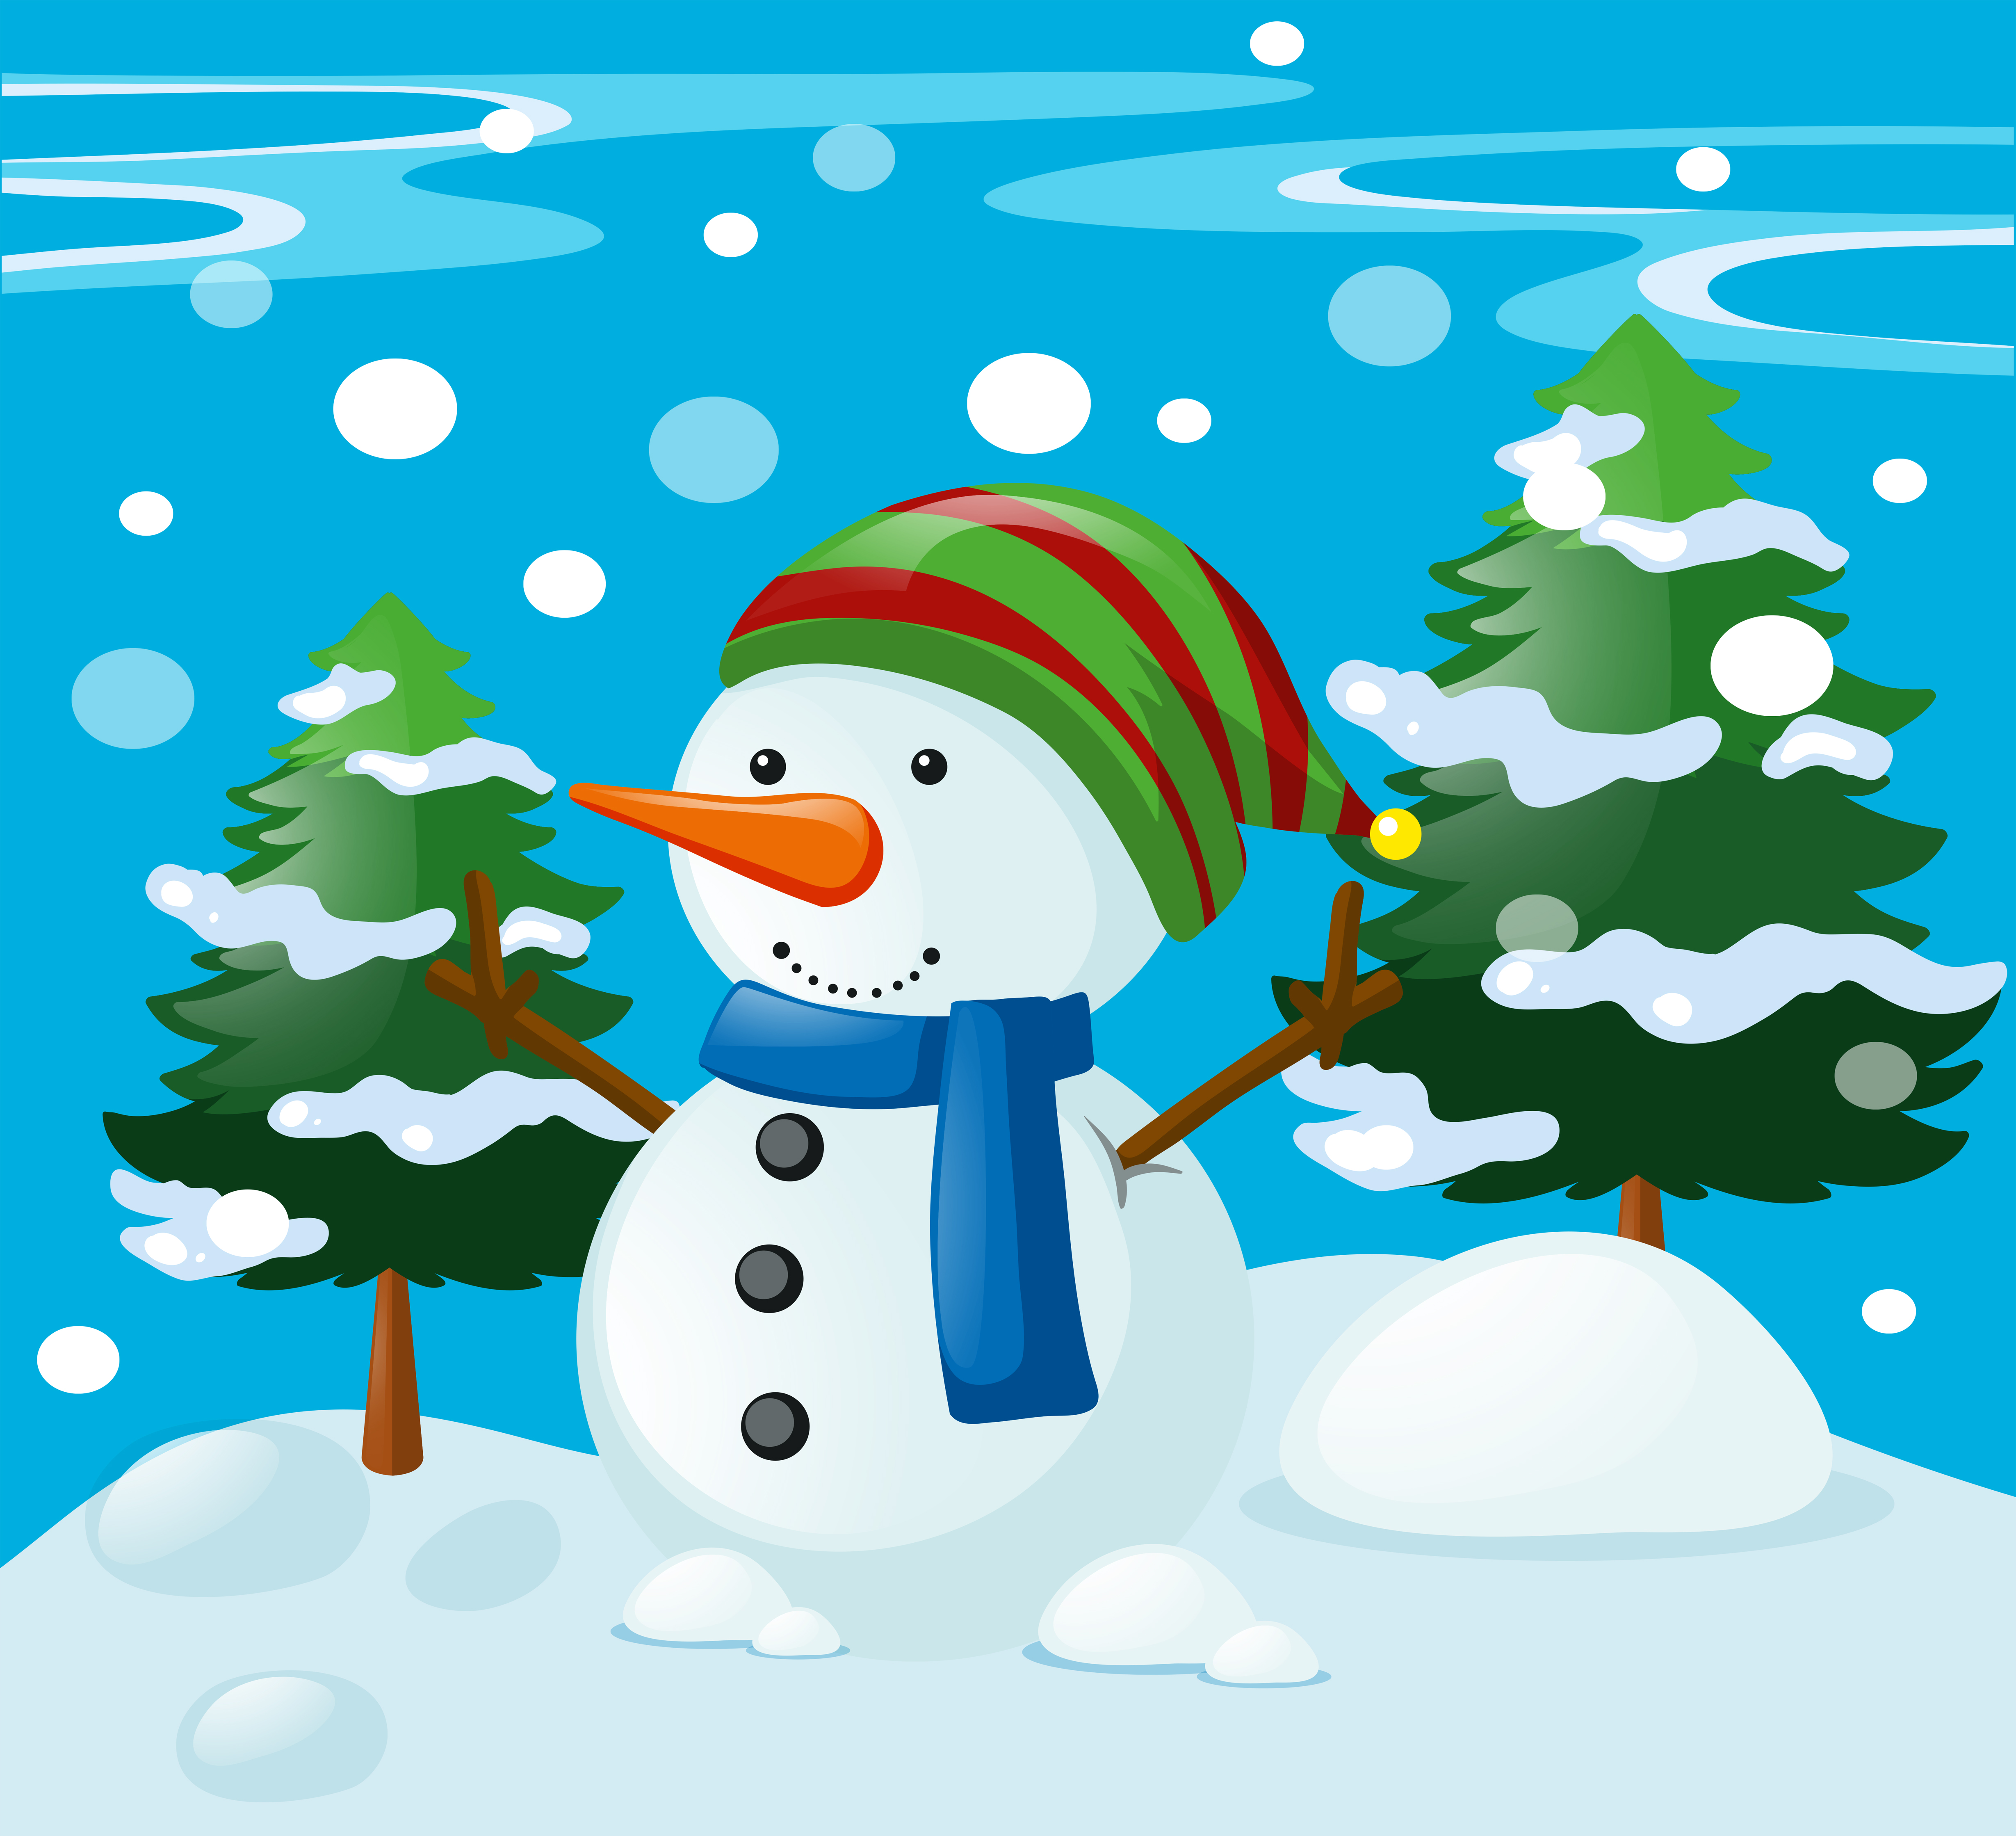  Winter  scene with snowman in the field 413401 Vector  Art 